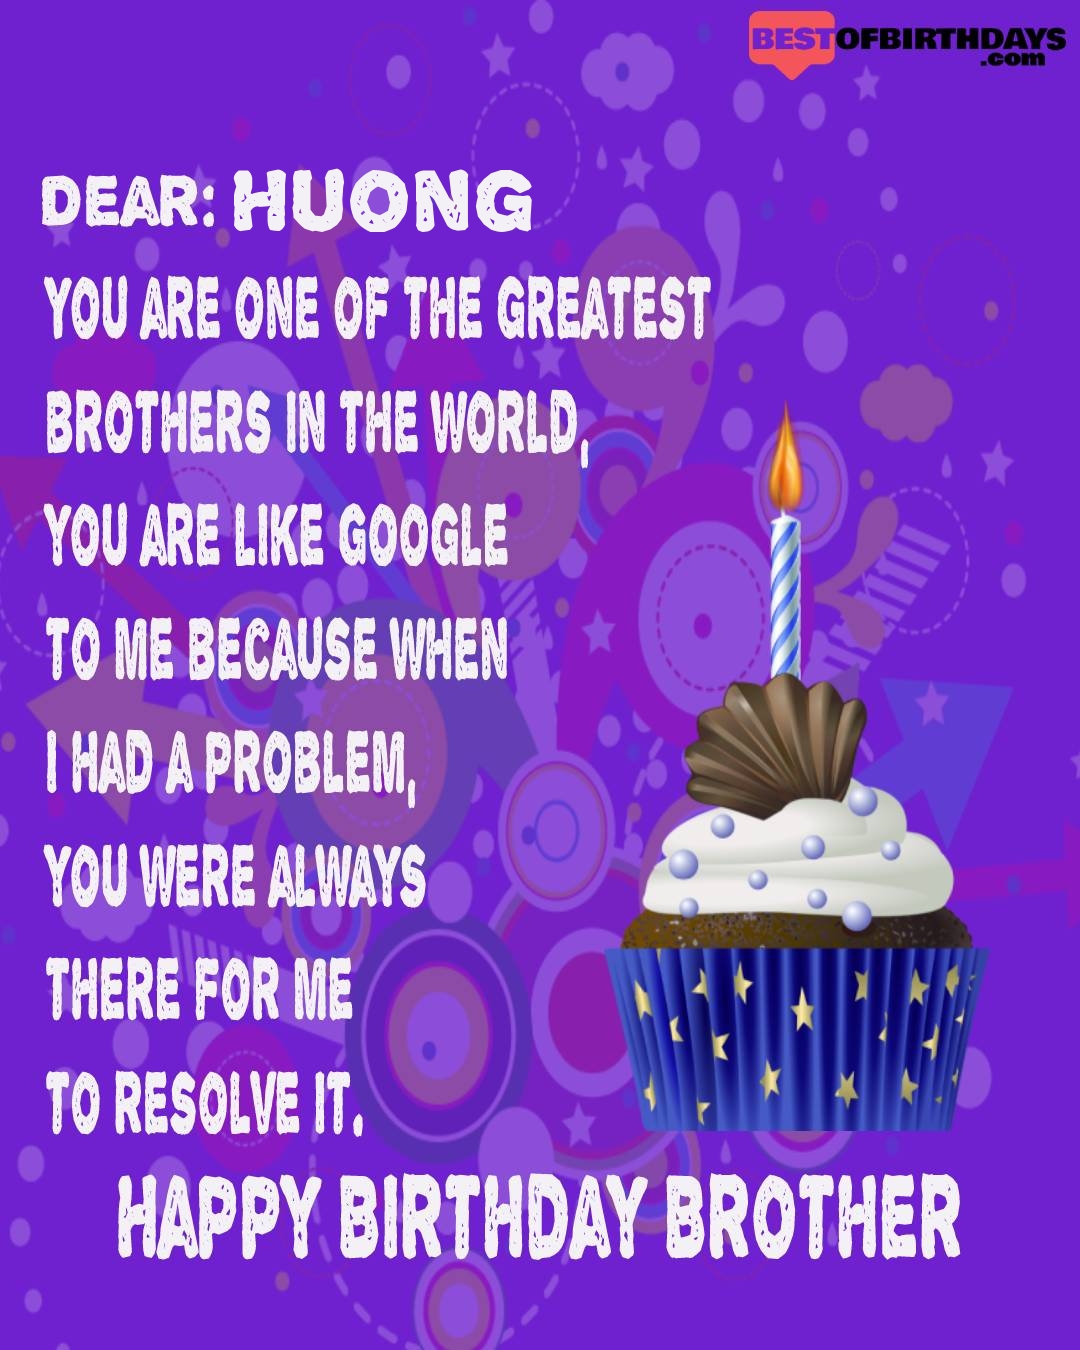 Happy birthday huong bhai brother bro